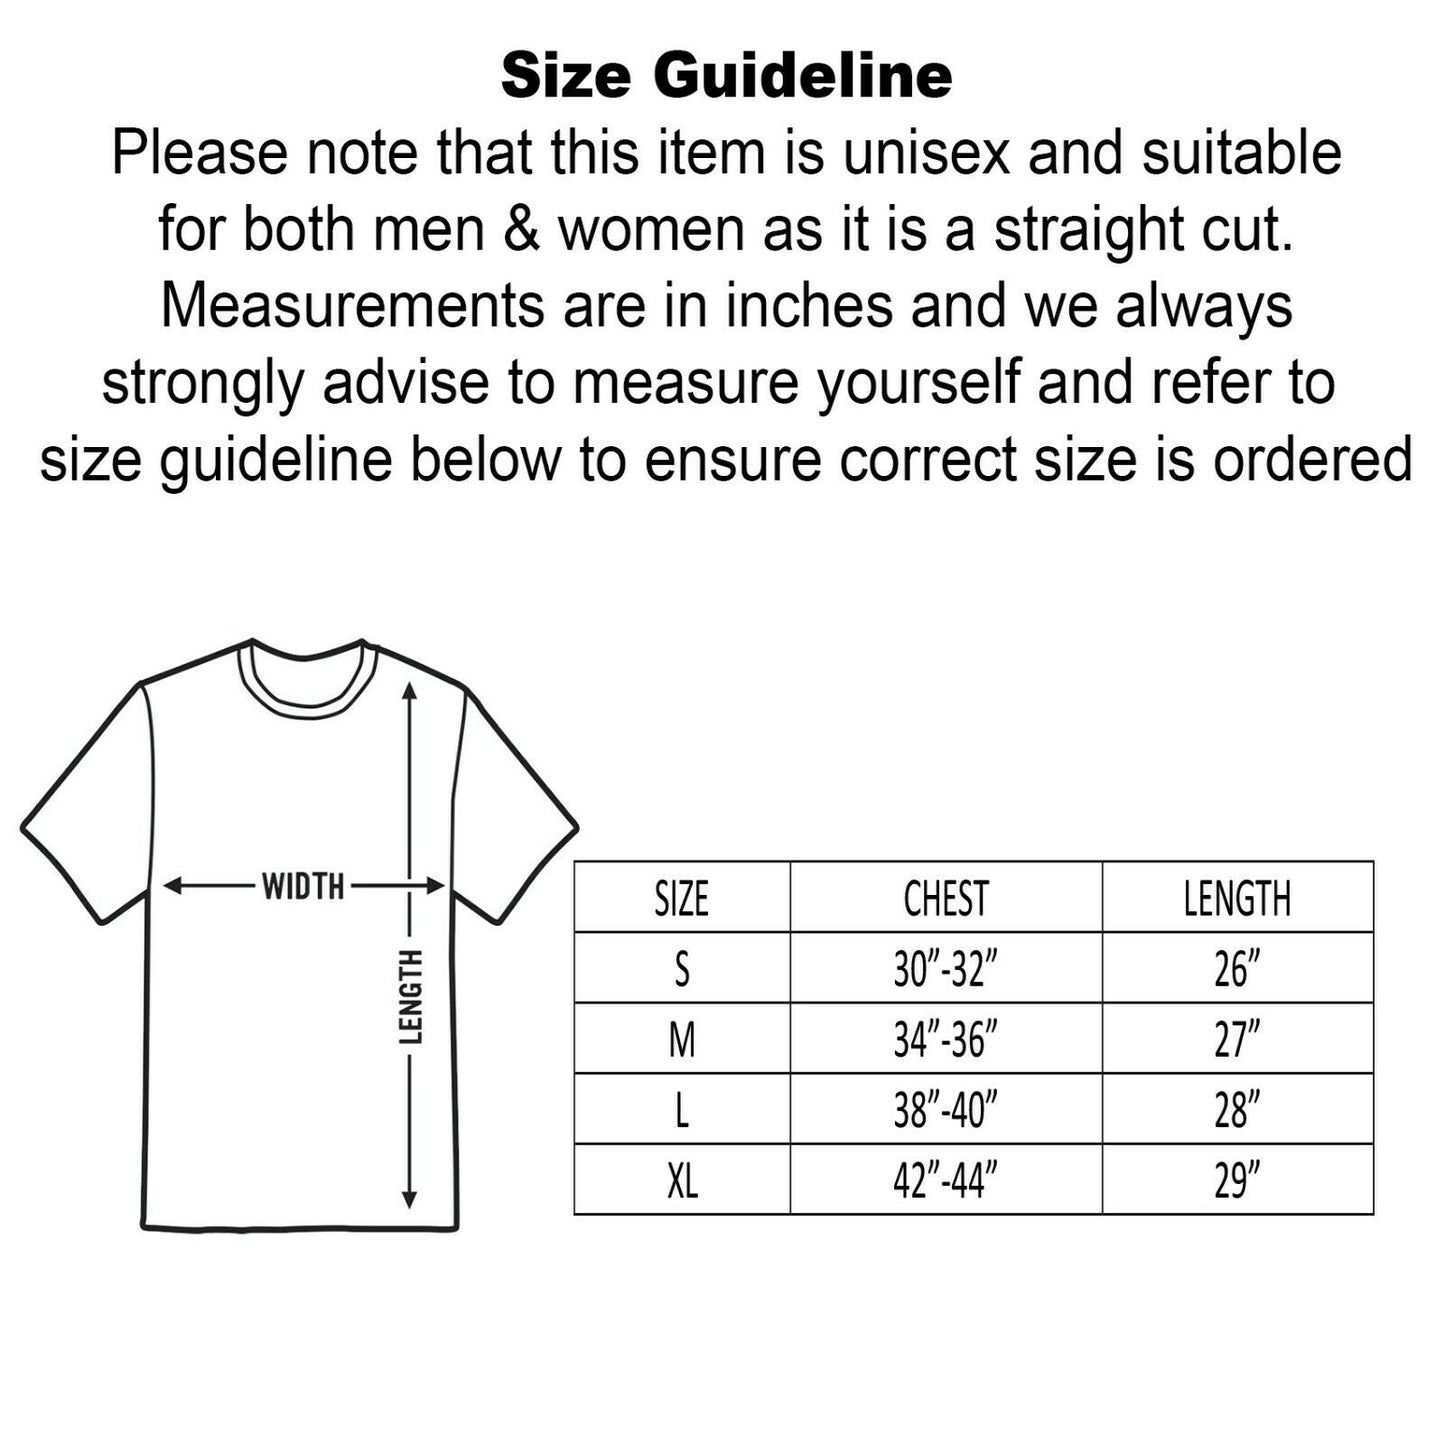 Unisex Public Enemy Raglan 3/4 Sleeve Baseball T-Shirt